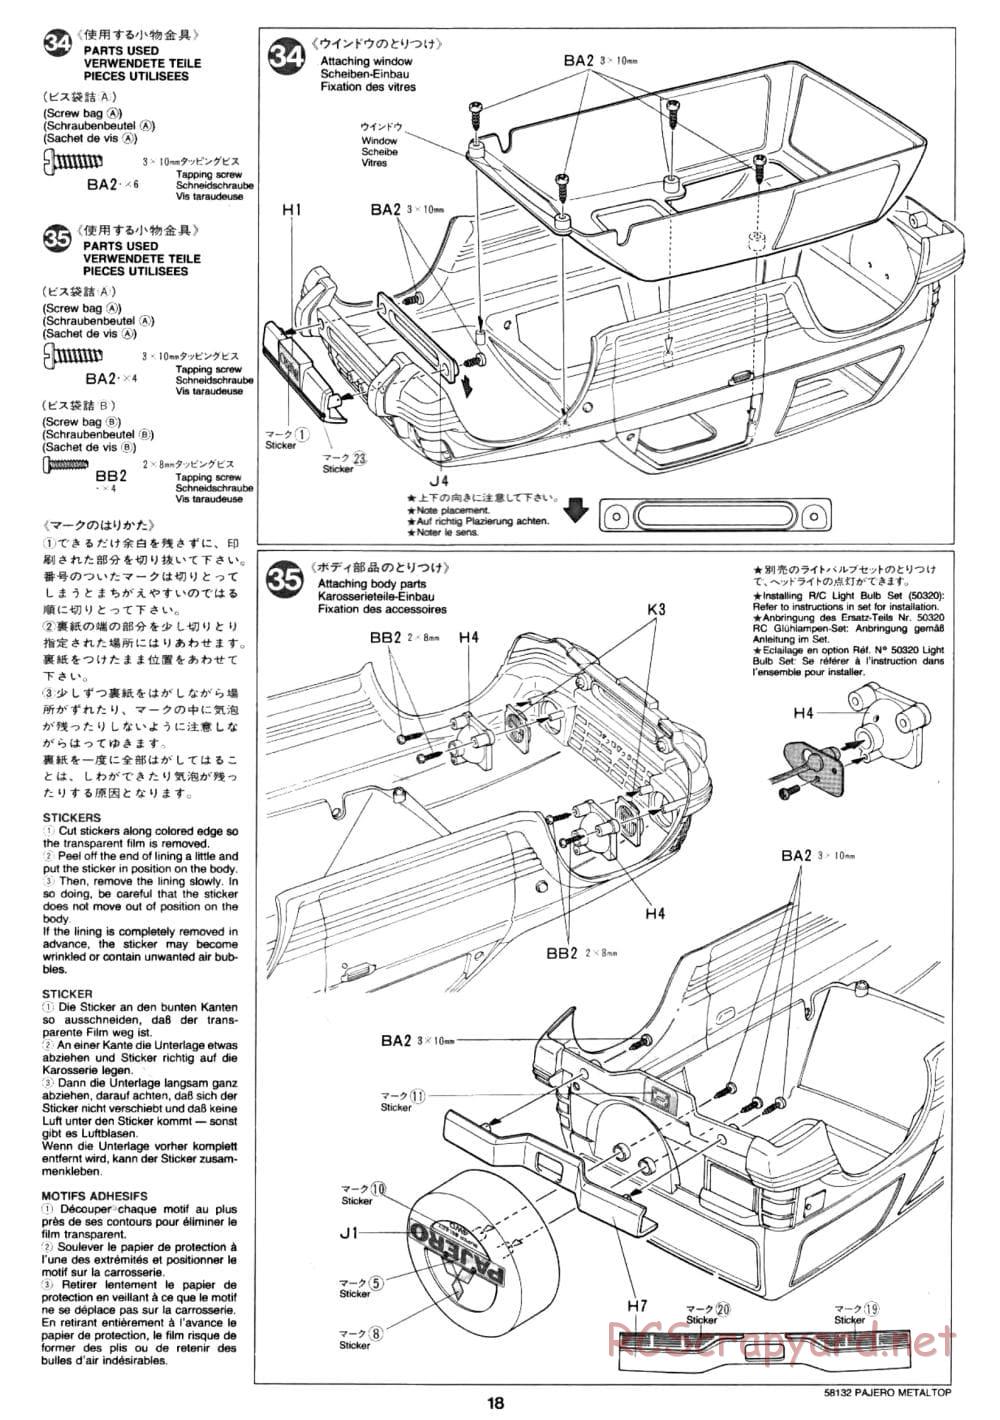 Tamiya - Mitsubishi Pajero Metaltop Wide - CC-01 Chassis - Manual - Page 18